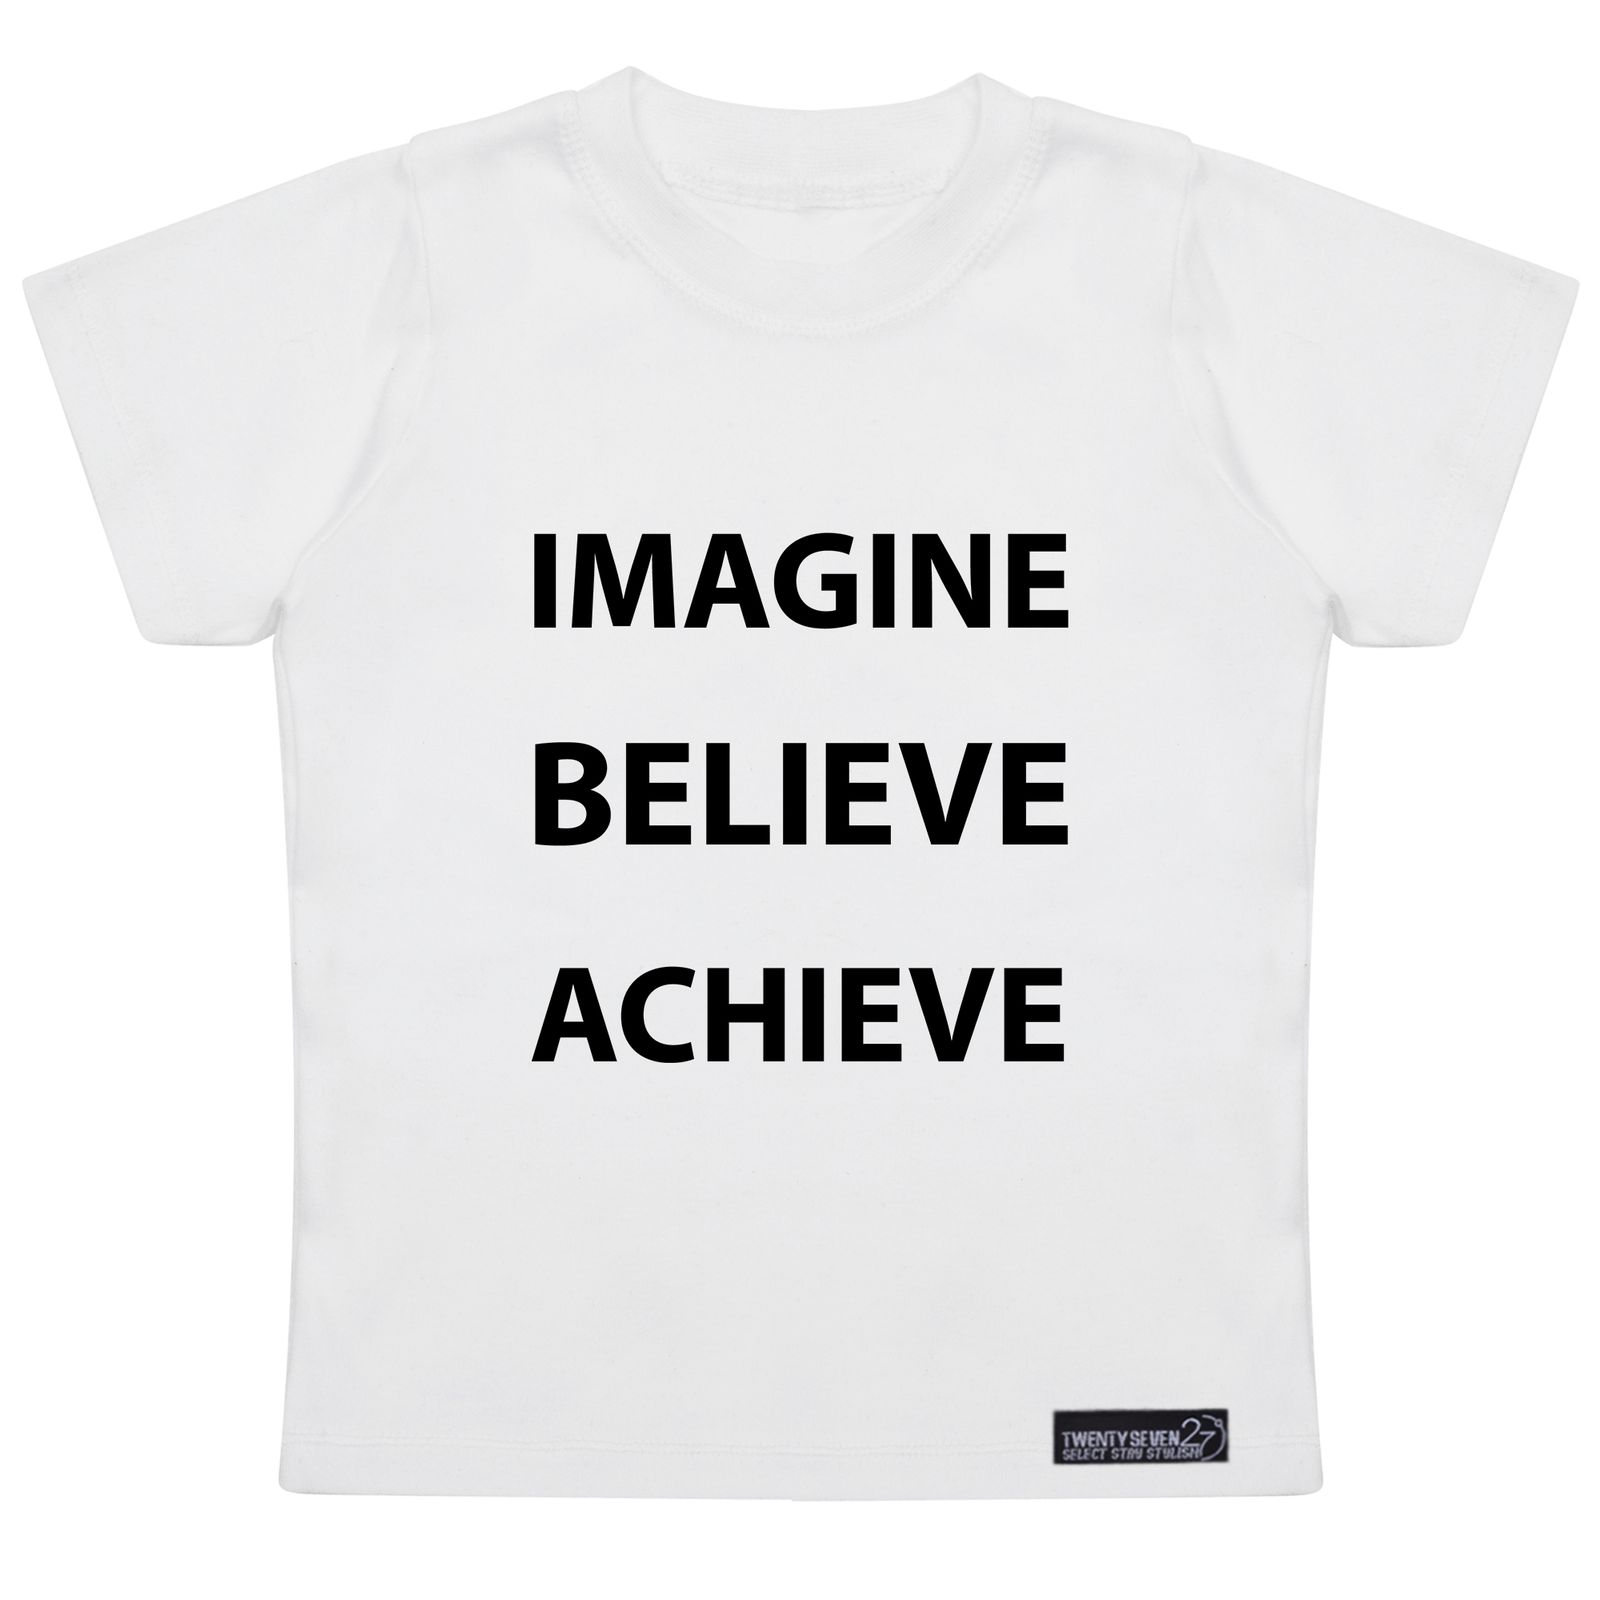 تی شرت آستین کوتاه پسرانه 27 مدل Imagine Believe Achieve کد MH971 -  - 1